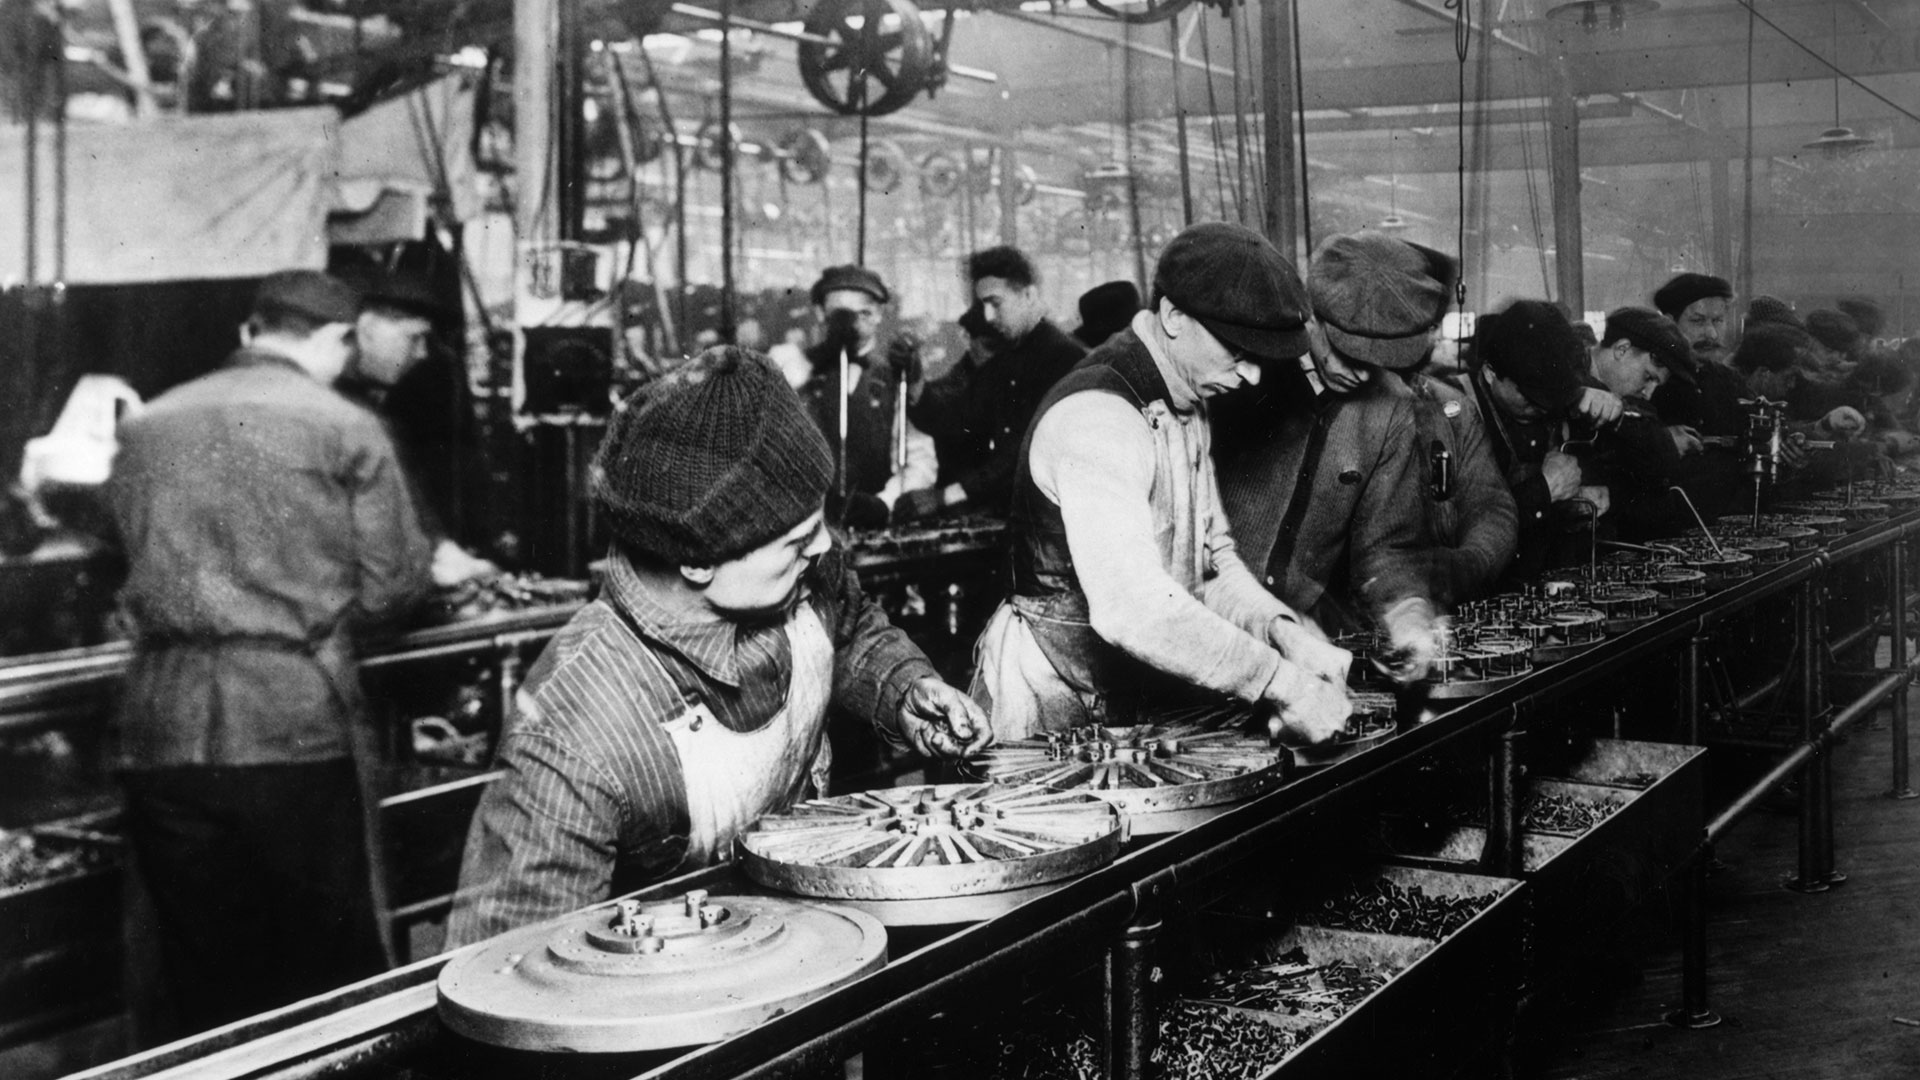 factories in the industrial revolution